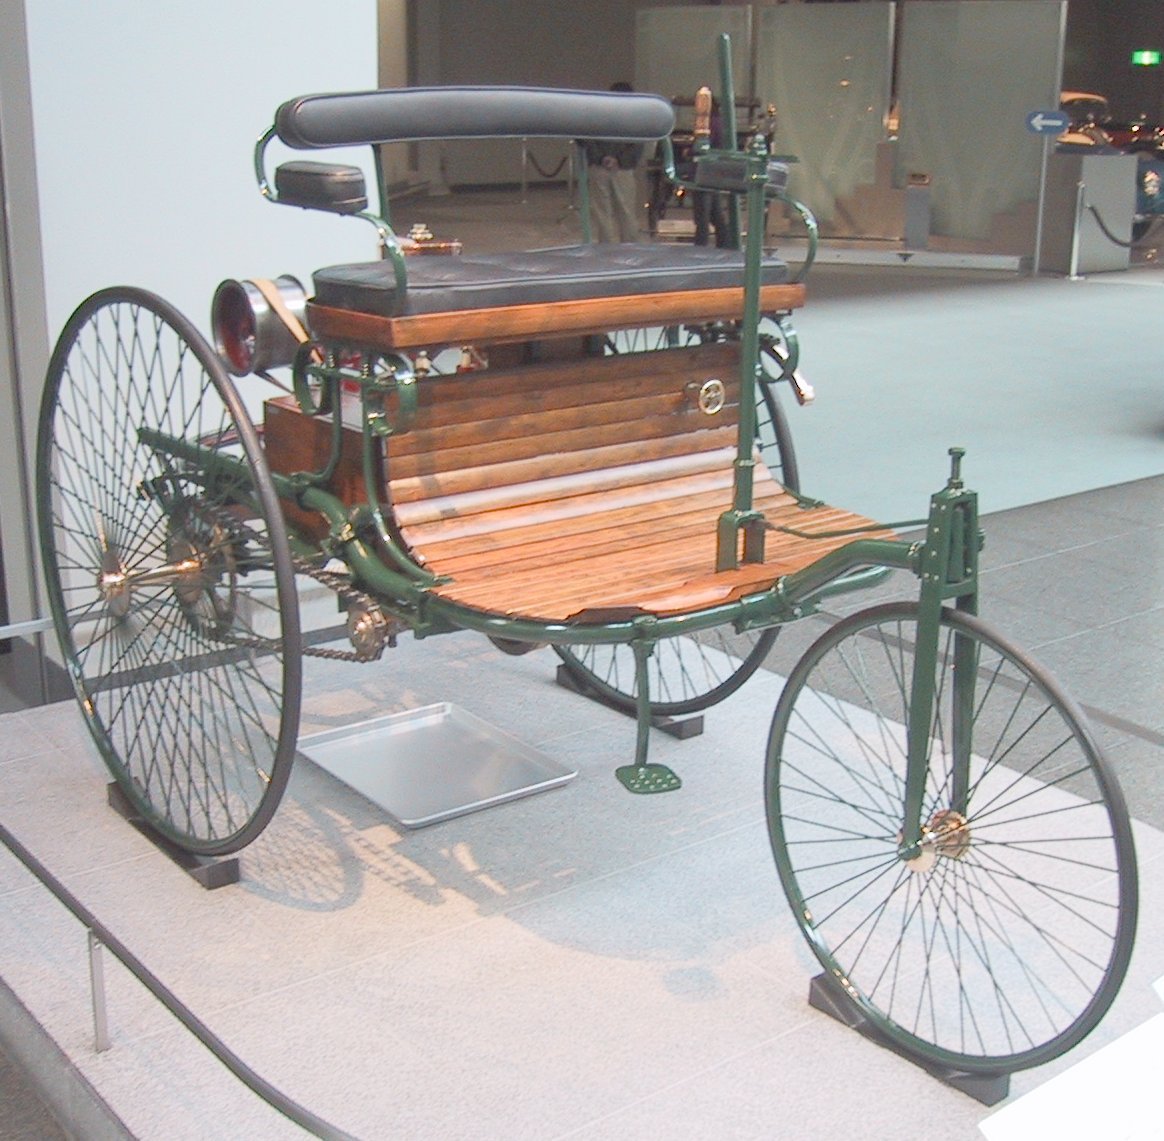 benz patent-motorwagen replica-pic. 1